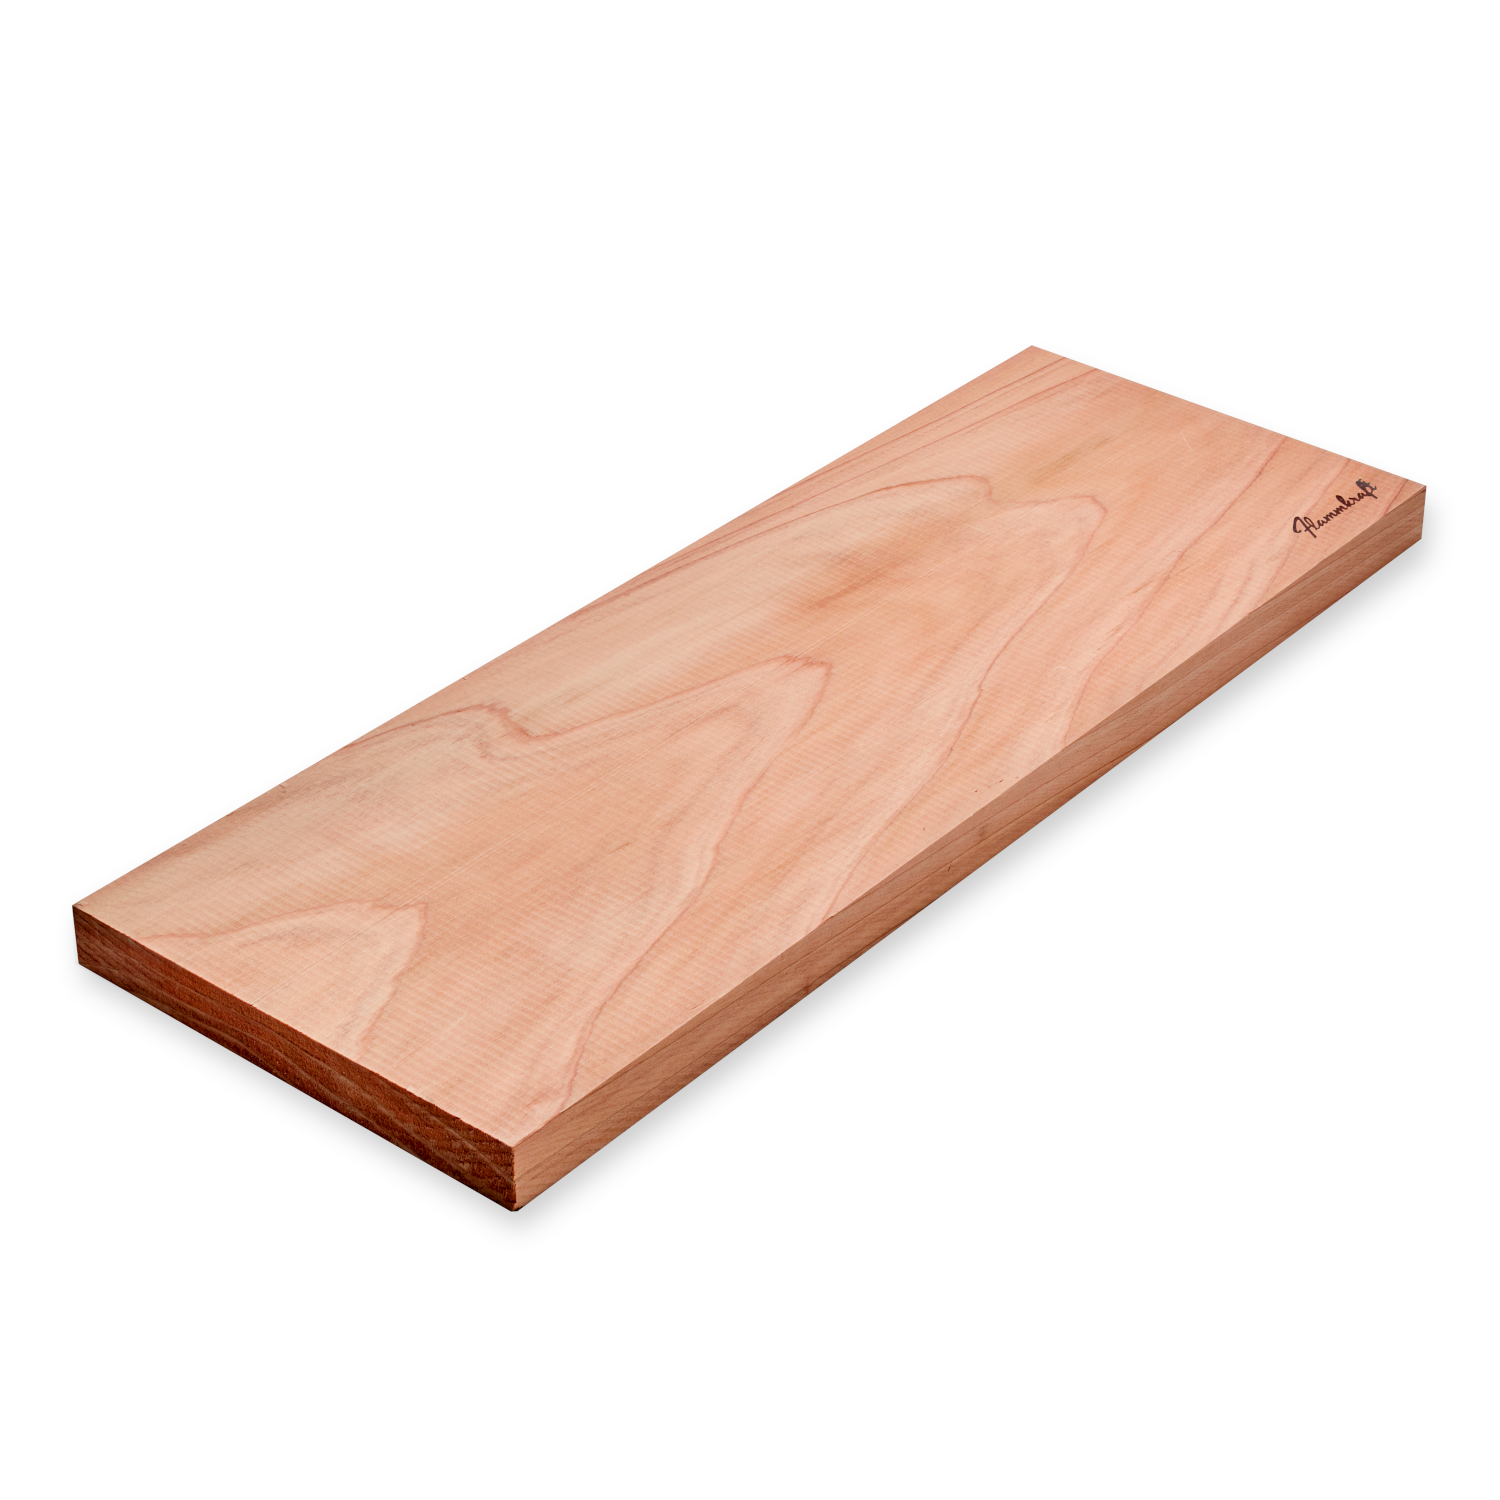 Räucherbrett / smoking board (495x180x22mm)Zeder / cedar